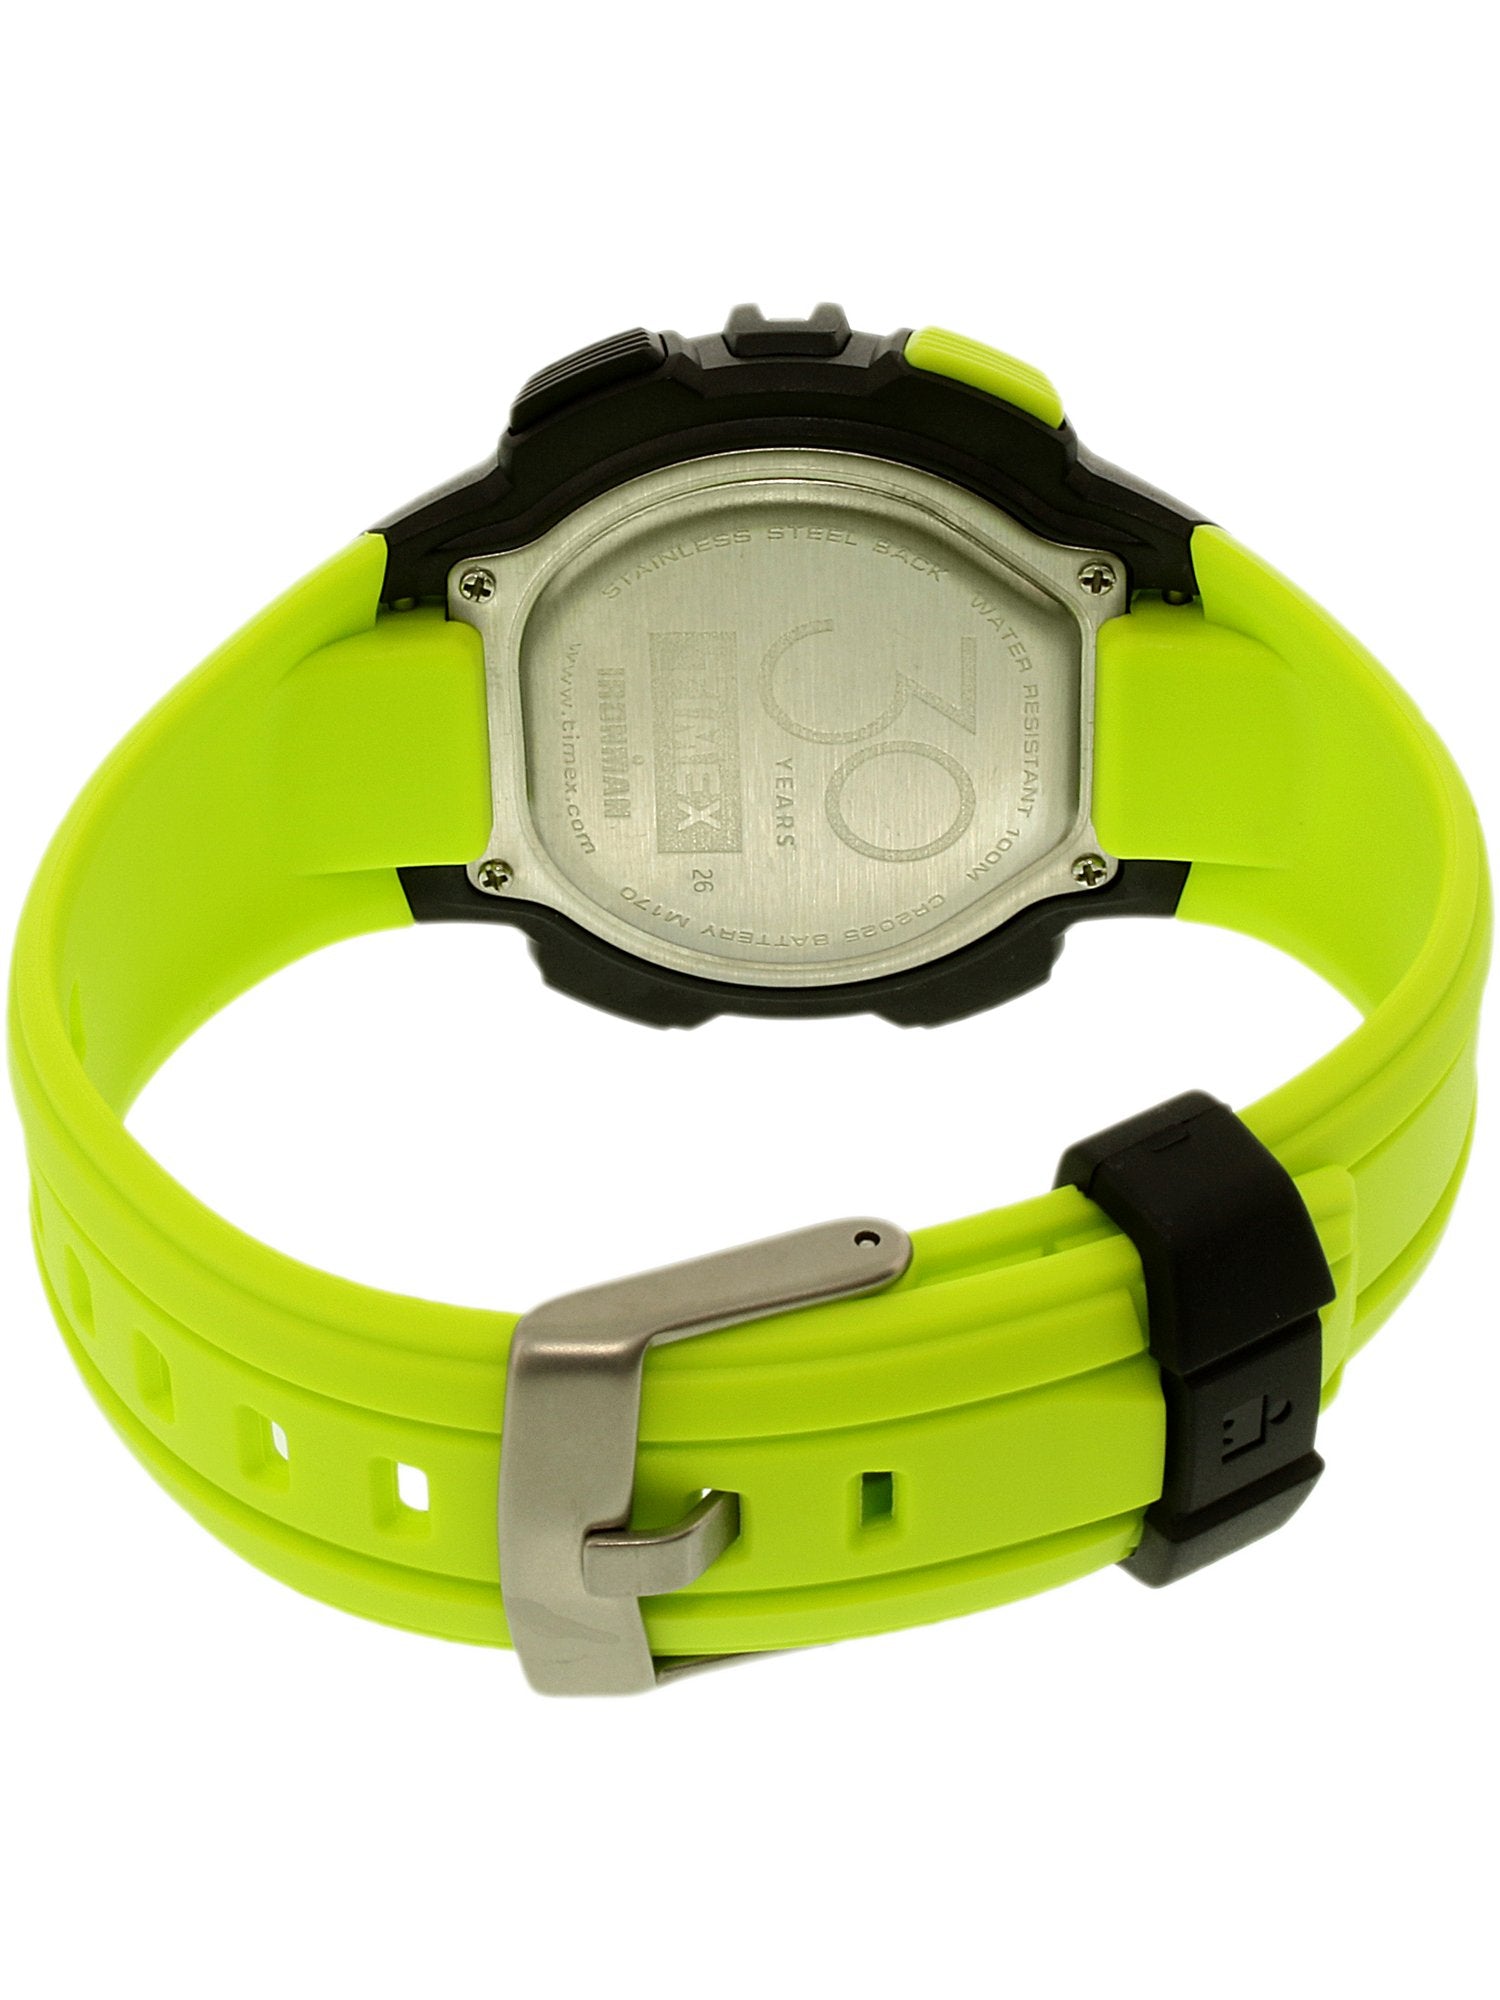 Timex IM Rugged 30 Lap Neon Lime Digital Watch #